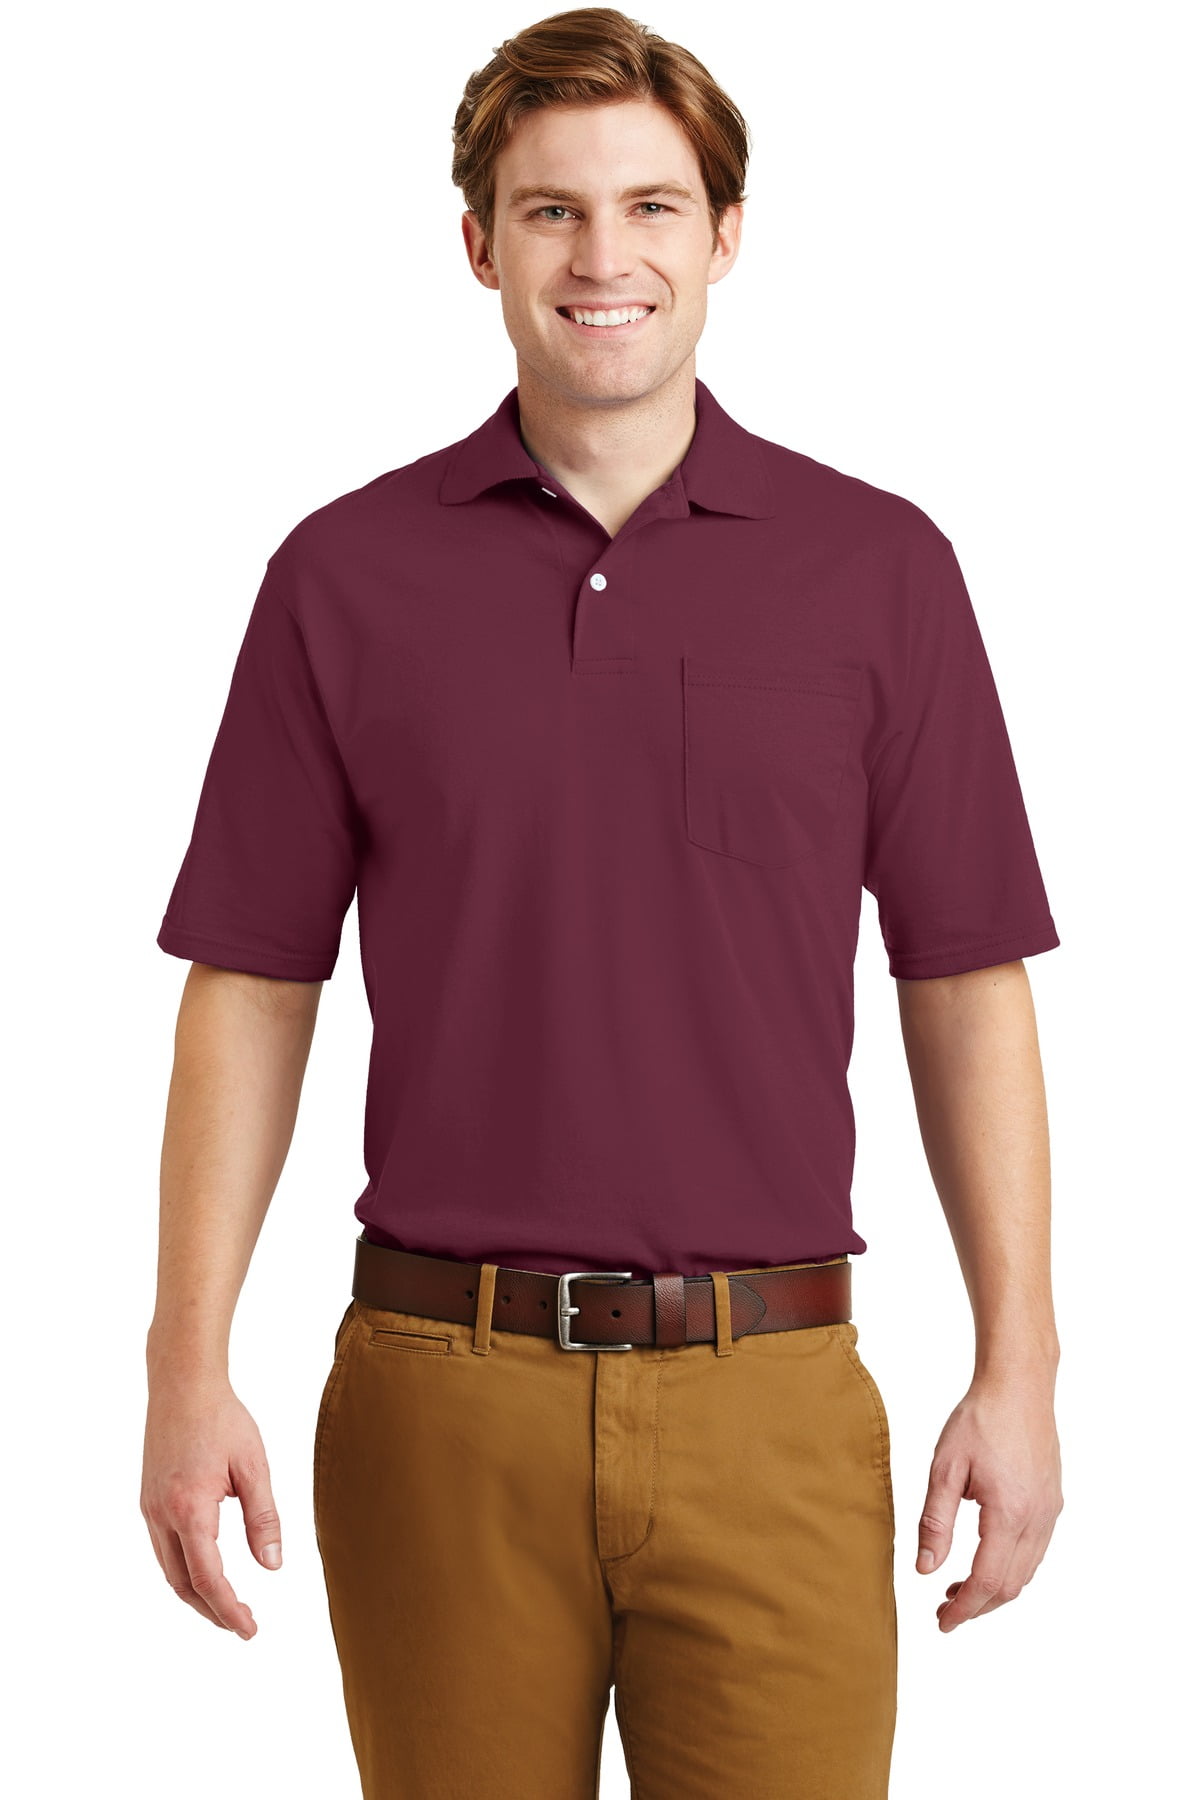 Jerzees Men's Two Button Placket Pocket Polo Shirt 436P